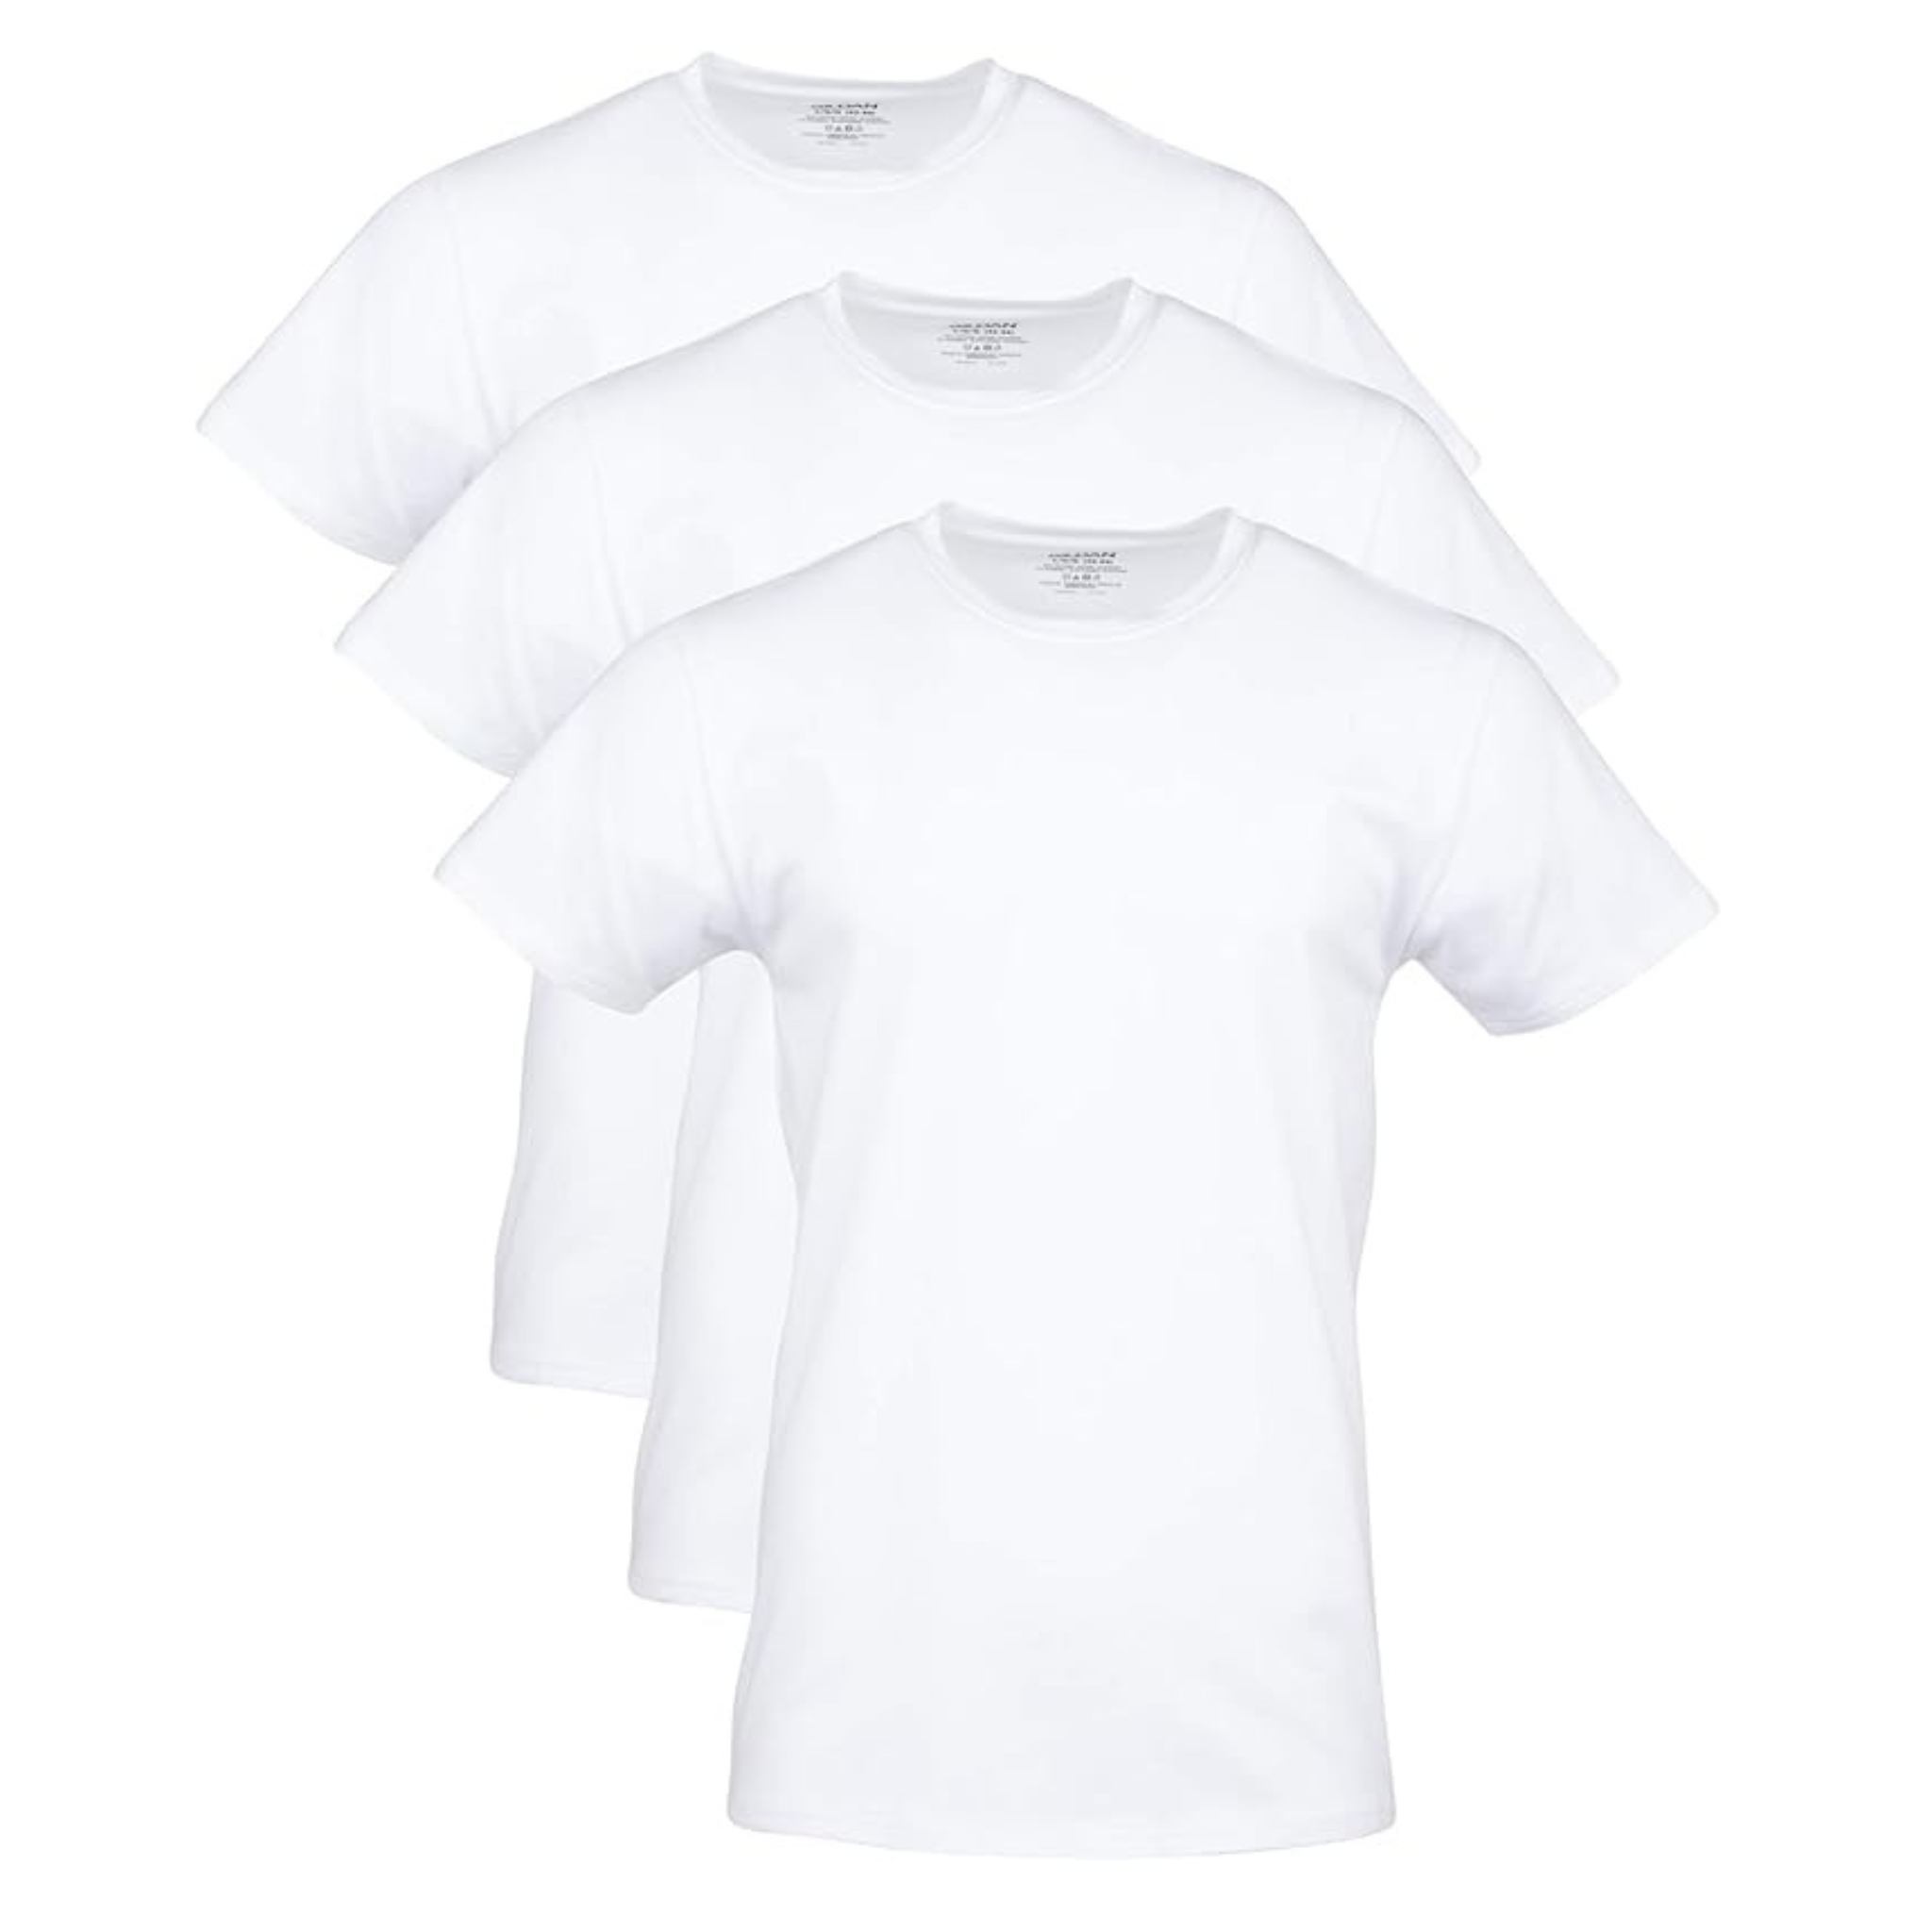 3-Pack of Gildan Men’s Cotton Stretch White T-Shirts